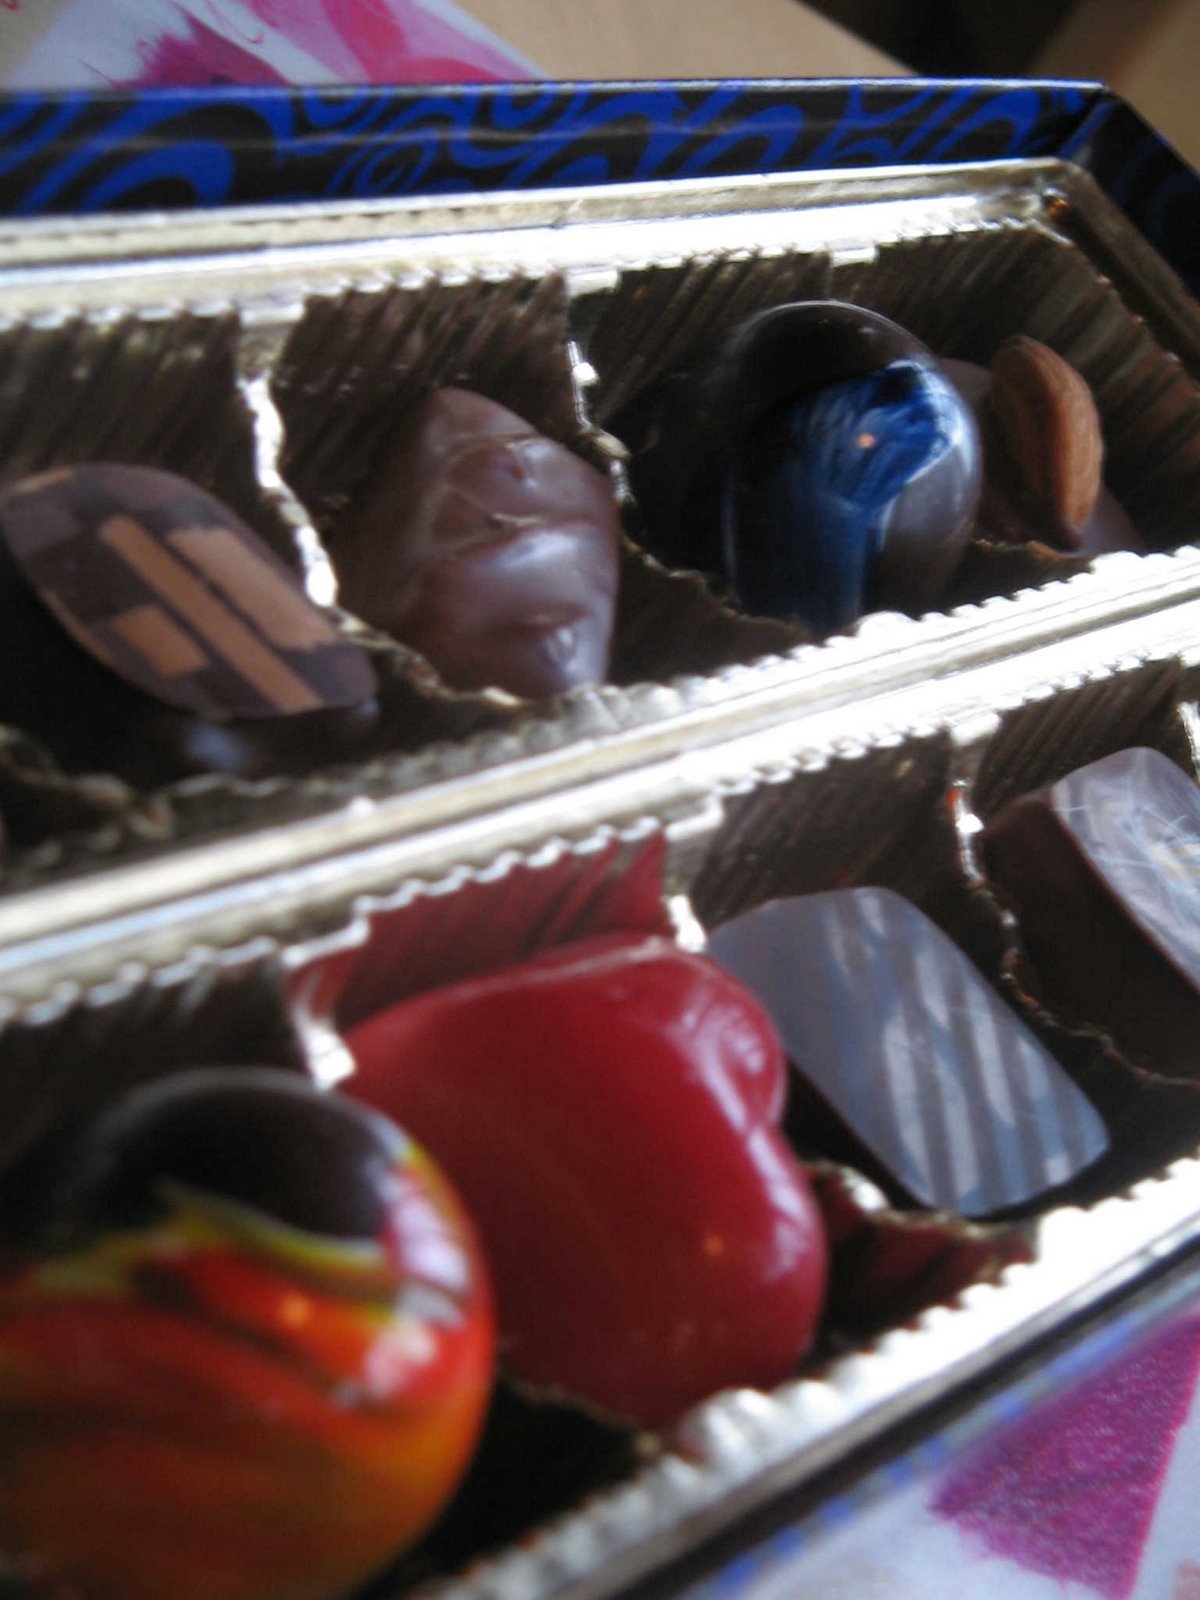 mmmm...chocolates